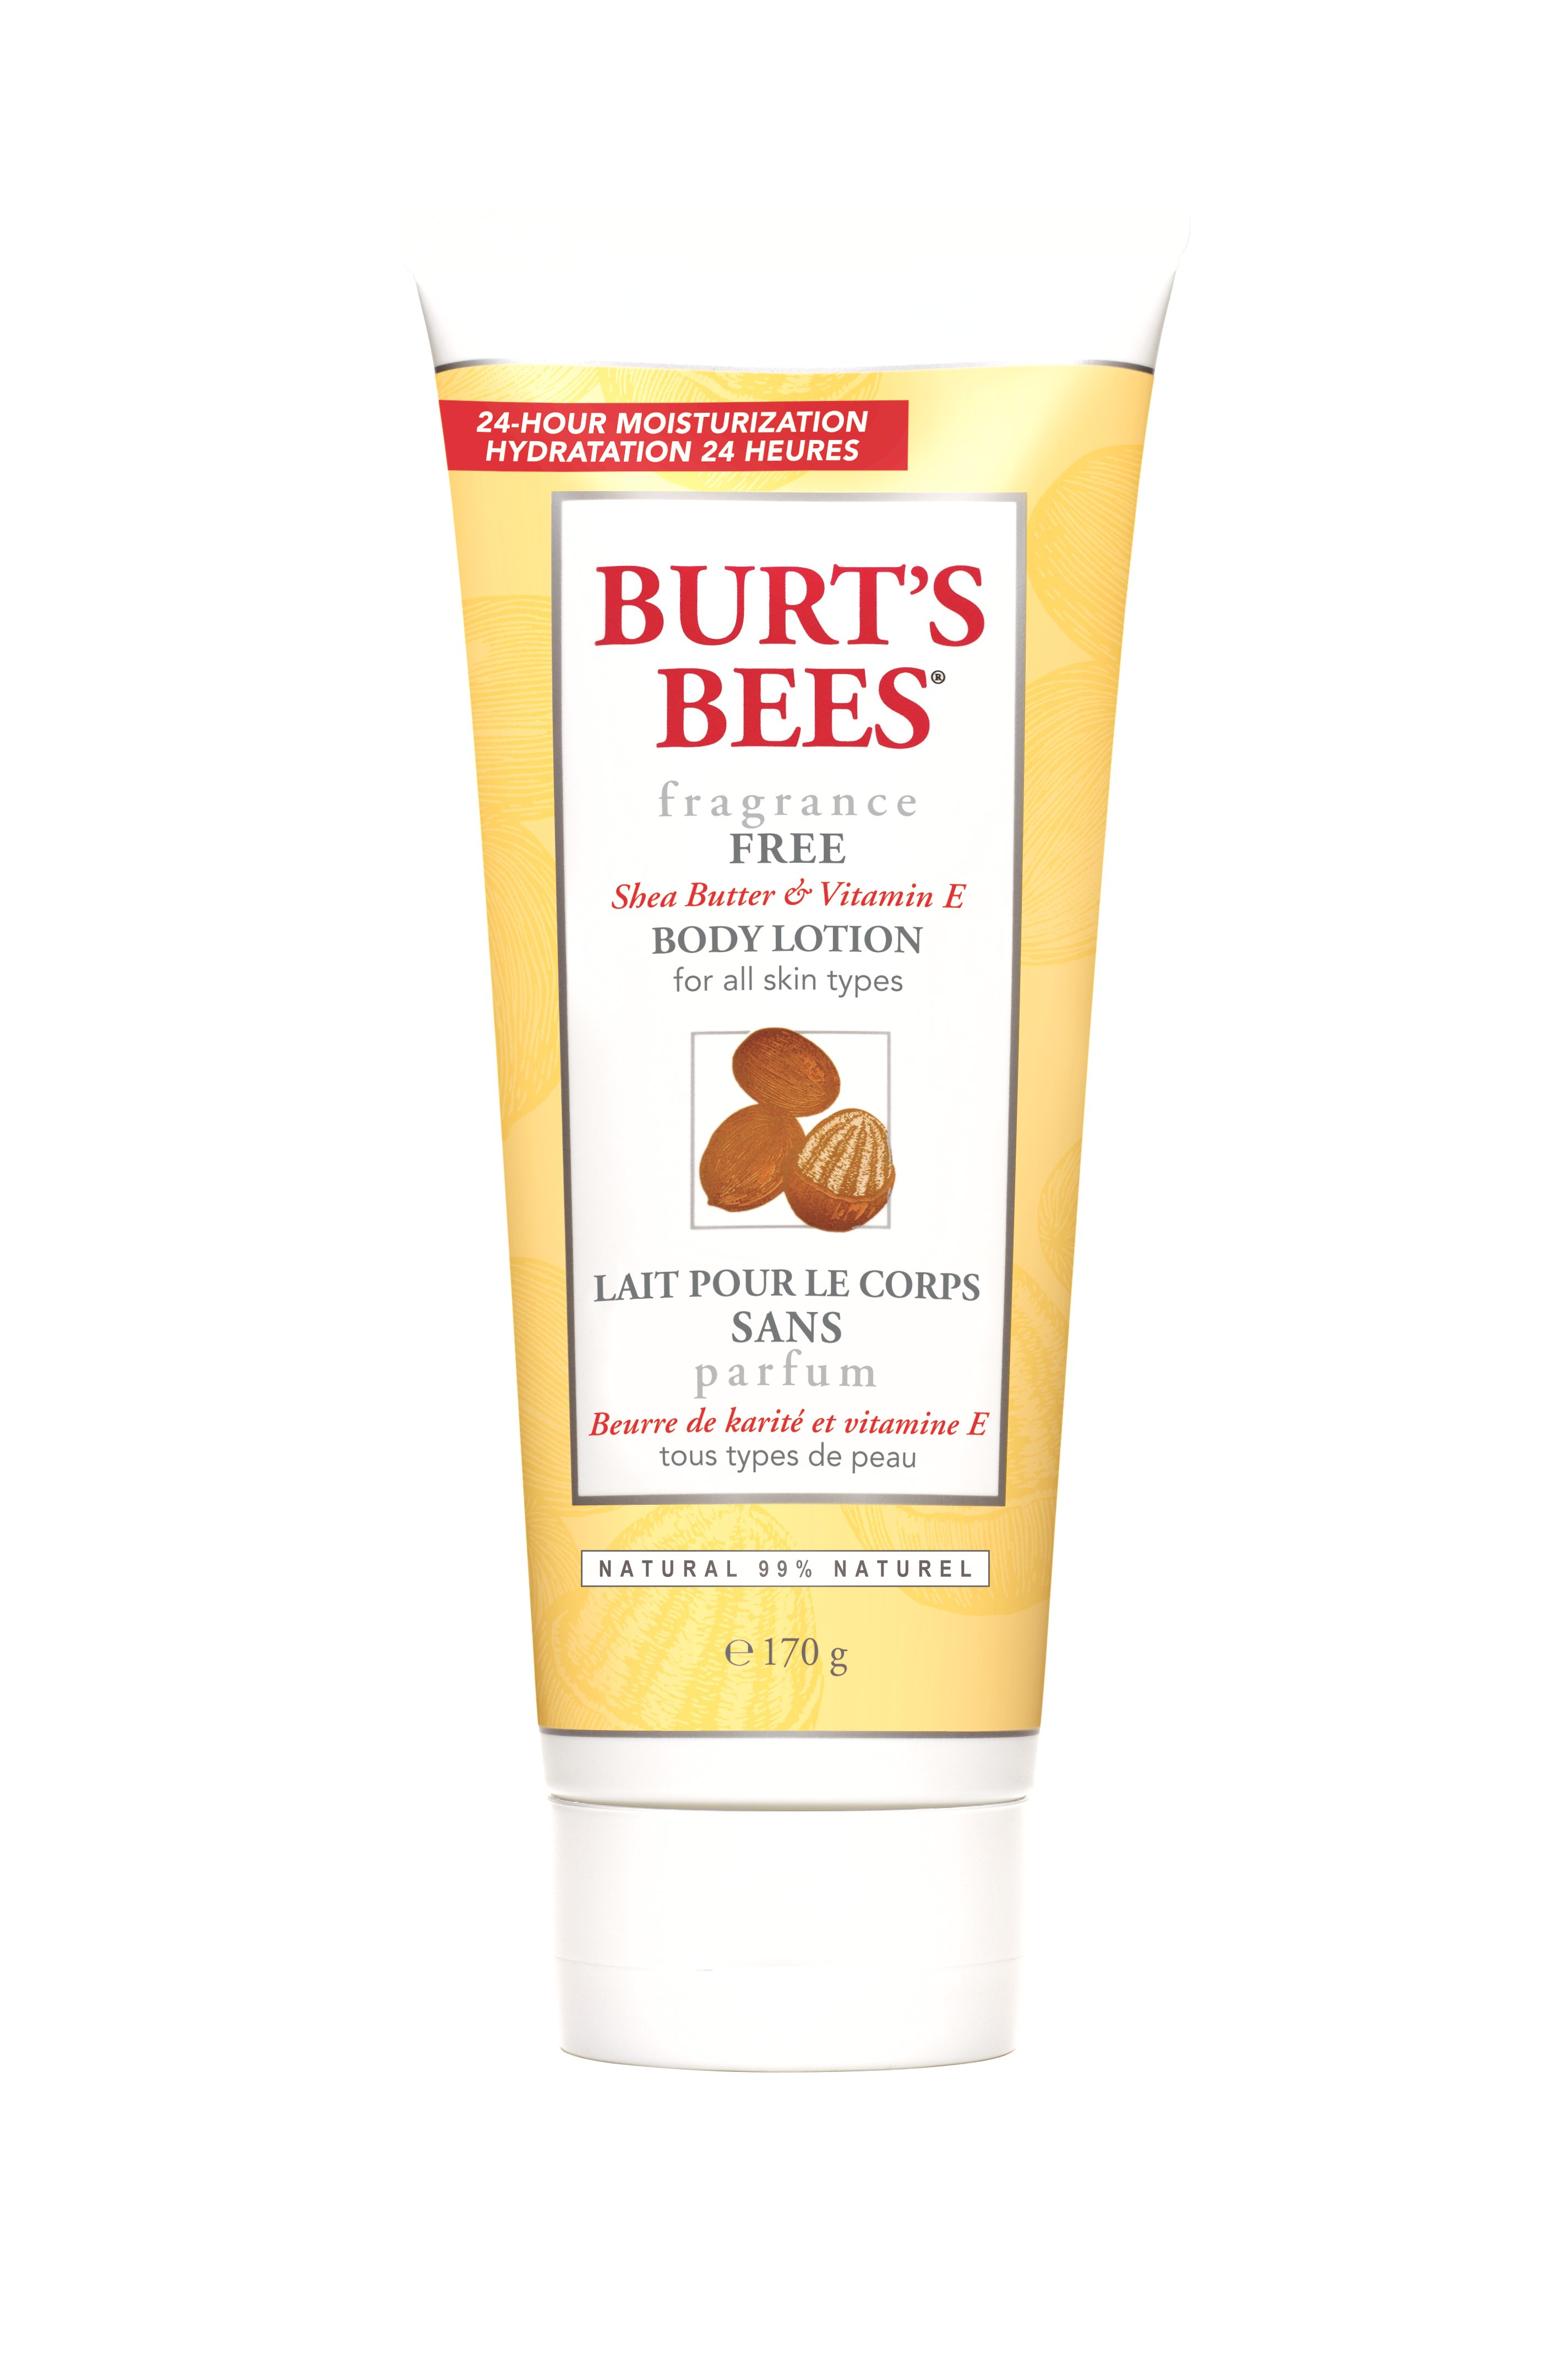 Burt's Bees Fragrance Free